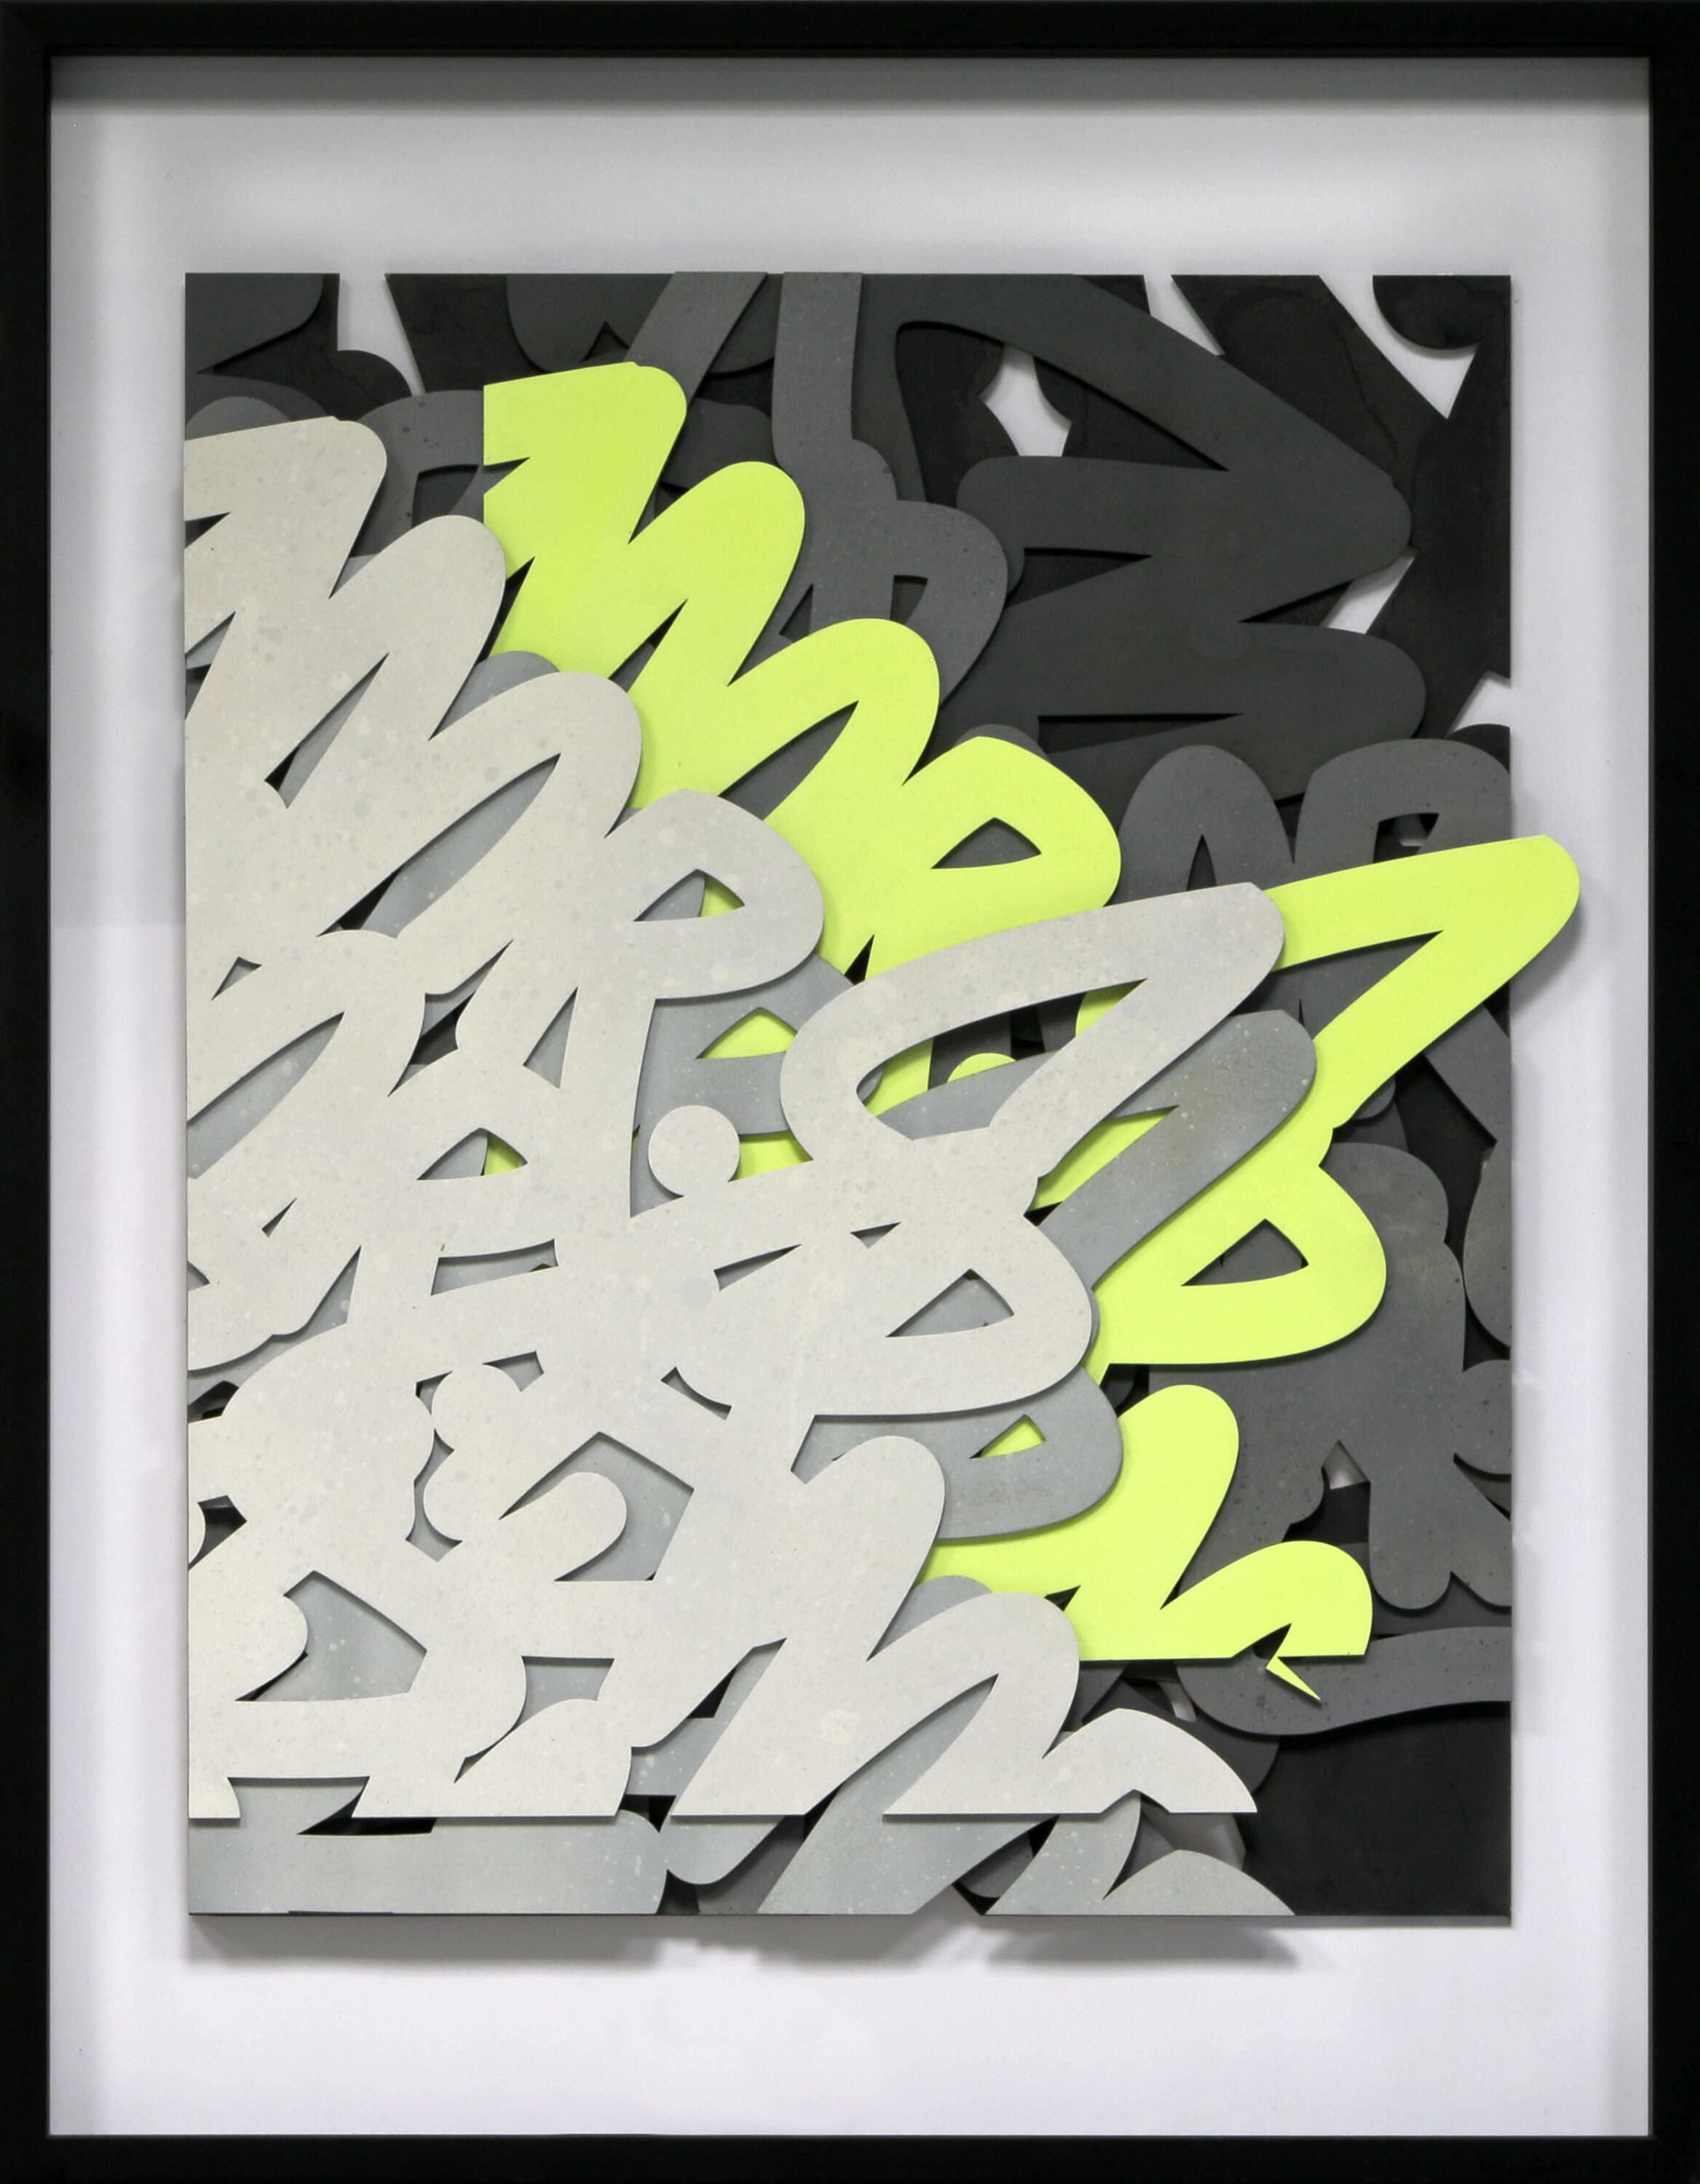 Monsieur-S-abstract-graffiti-1